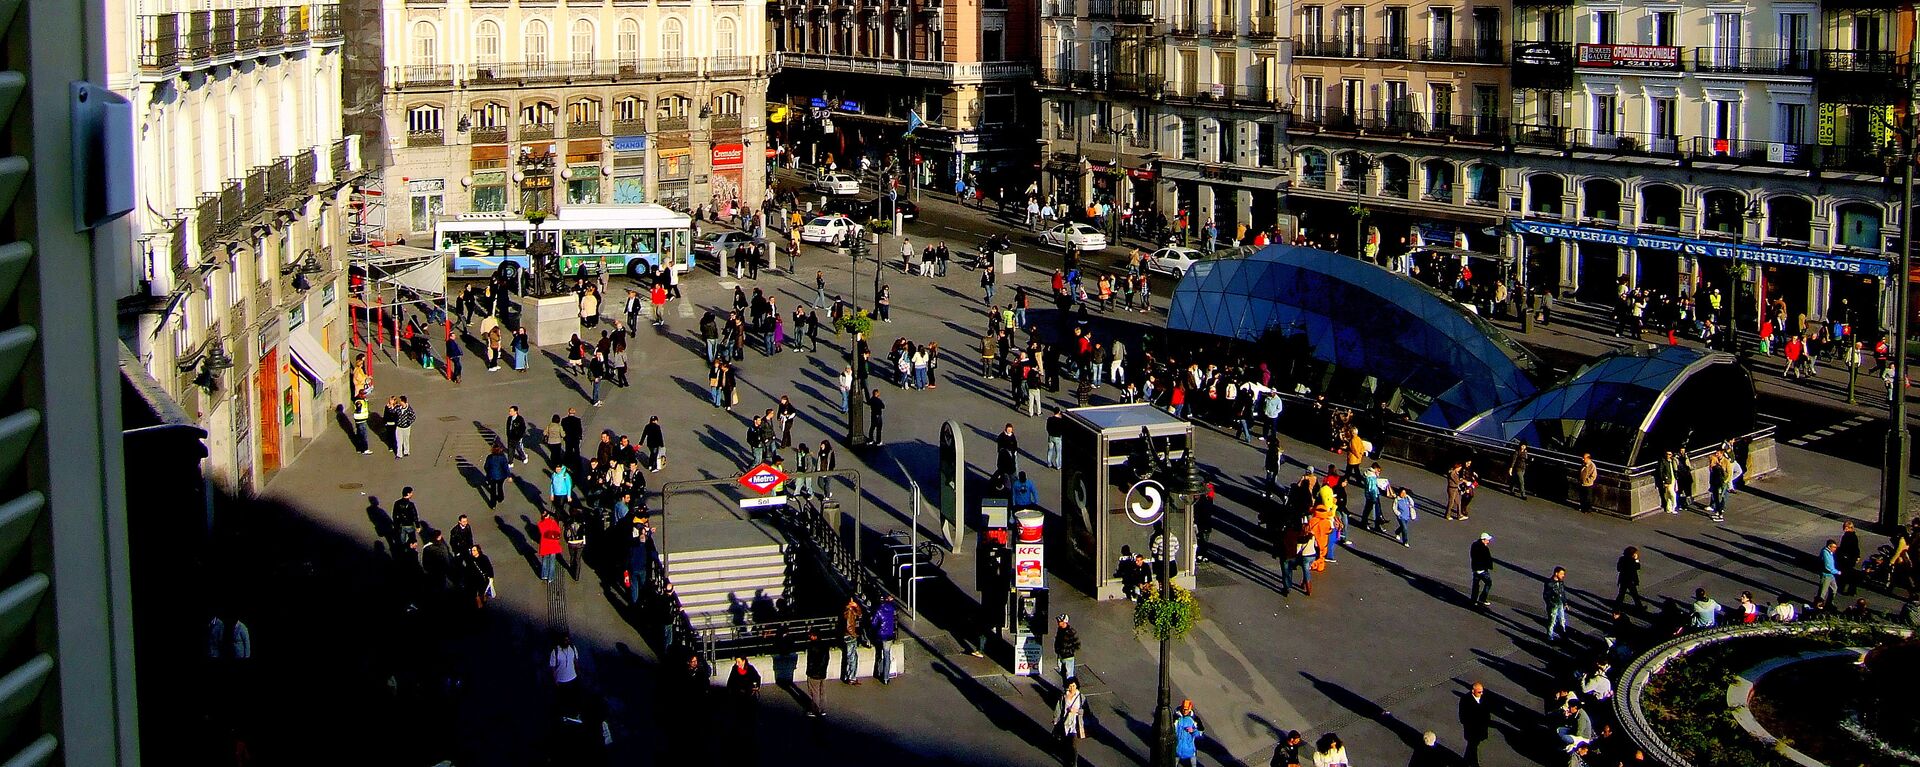 Puerta del Sol en Madrid (archivo) - Sputnik Mundo, 1920, 05.07.2021